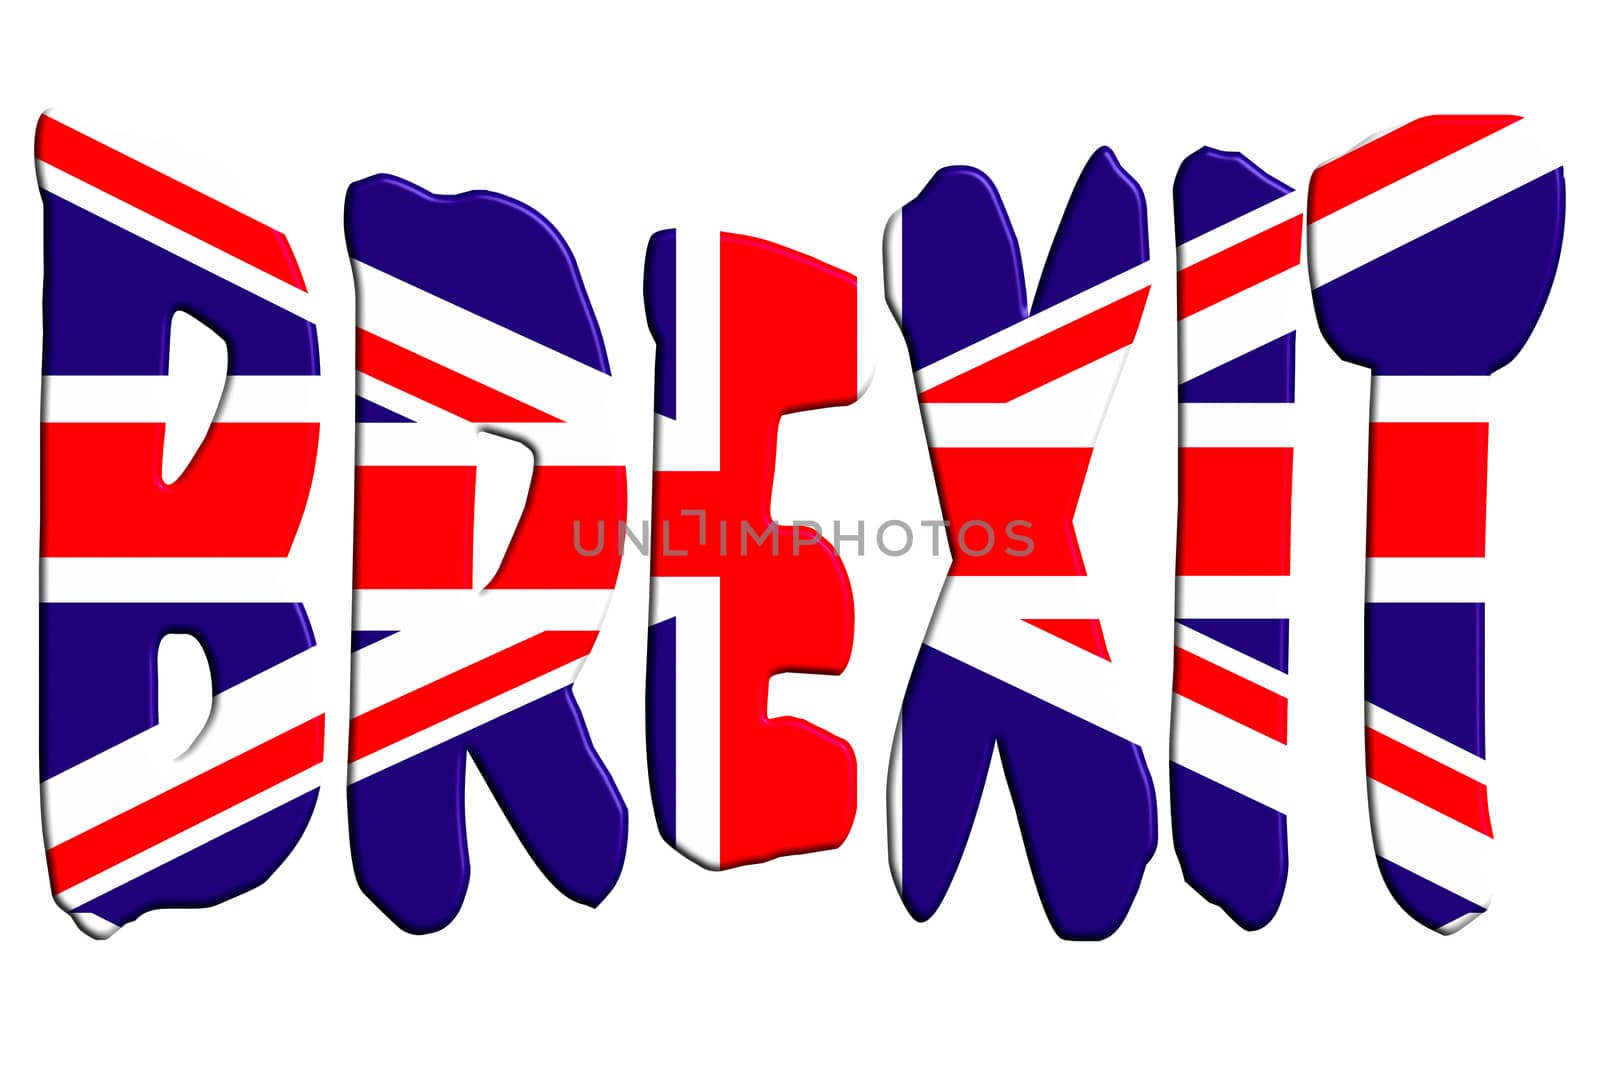 United Kingdom and Gibraltar European Union membership referendum referendum outlet Britain (UK or Britain or England) from the EU (European Union), British suffrage. The flag of the UK & EU Symbolic, concept for United Kingdom and Gibraltar European Union membership referendum.